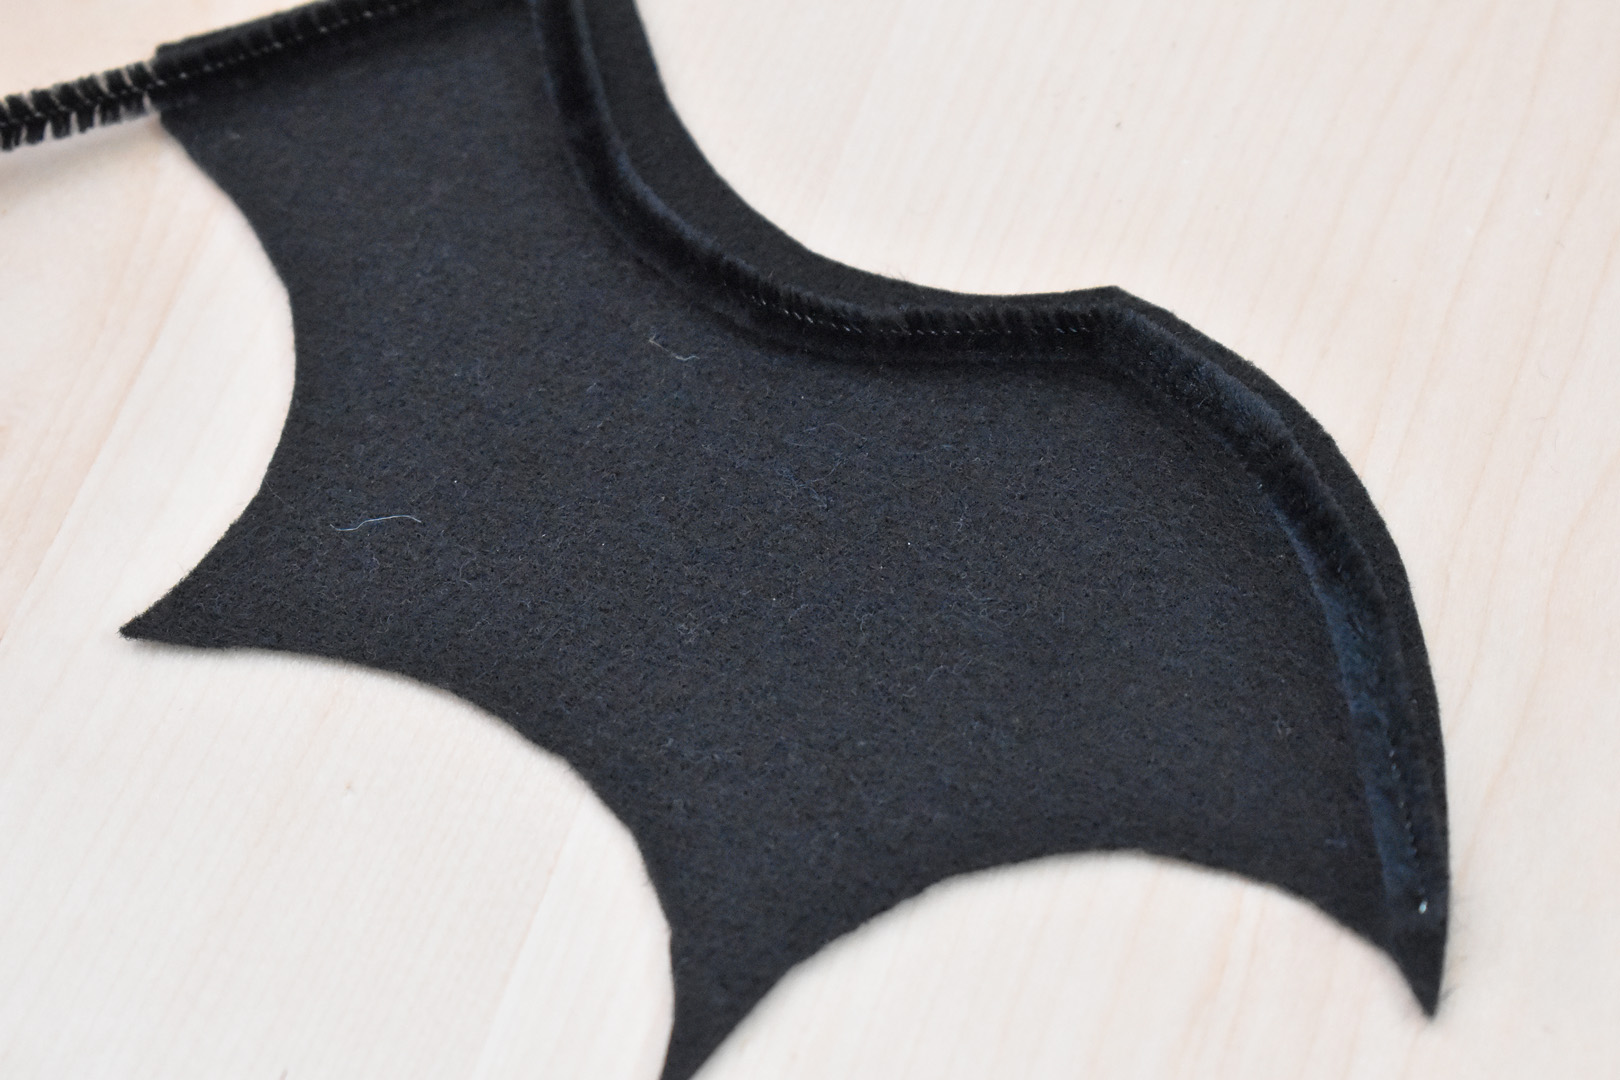 Halloween Bat Pattern Gilding Black Mesh Fabric For Sewing Costume